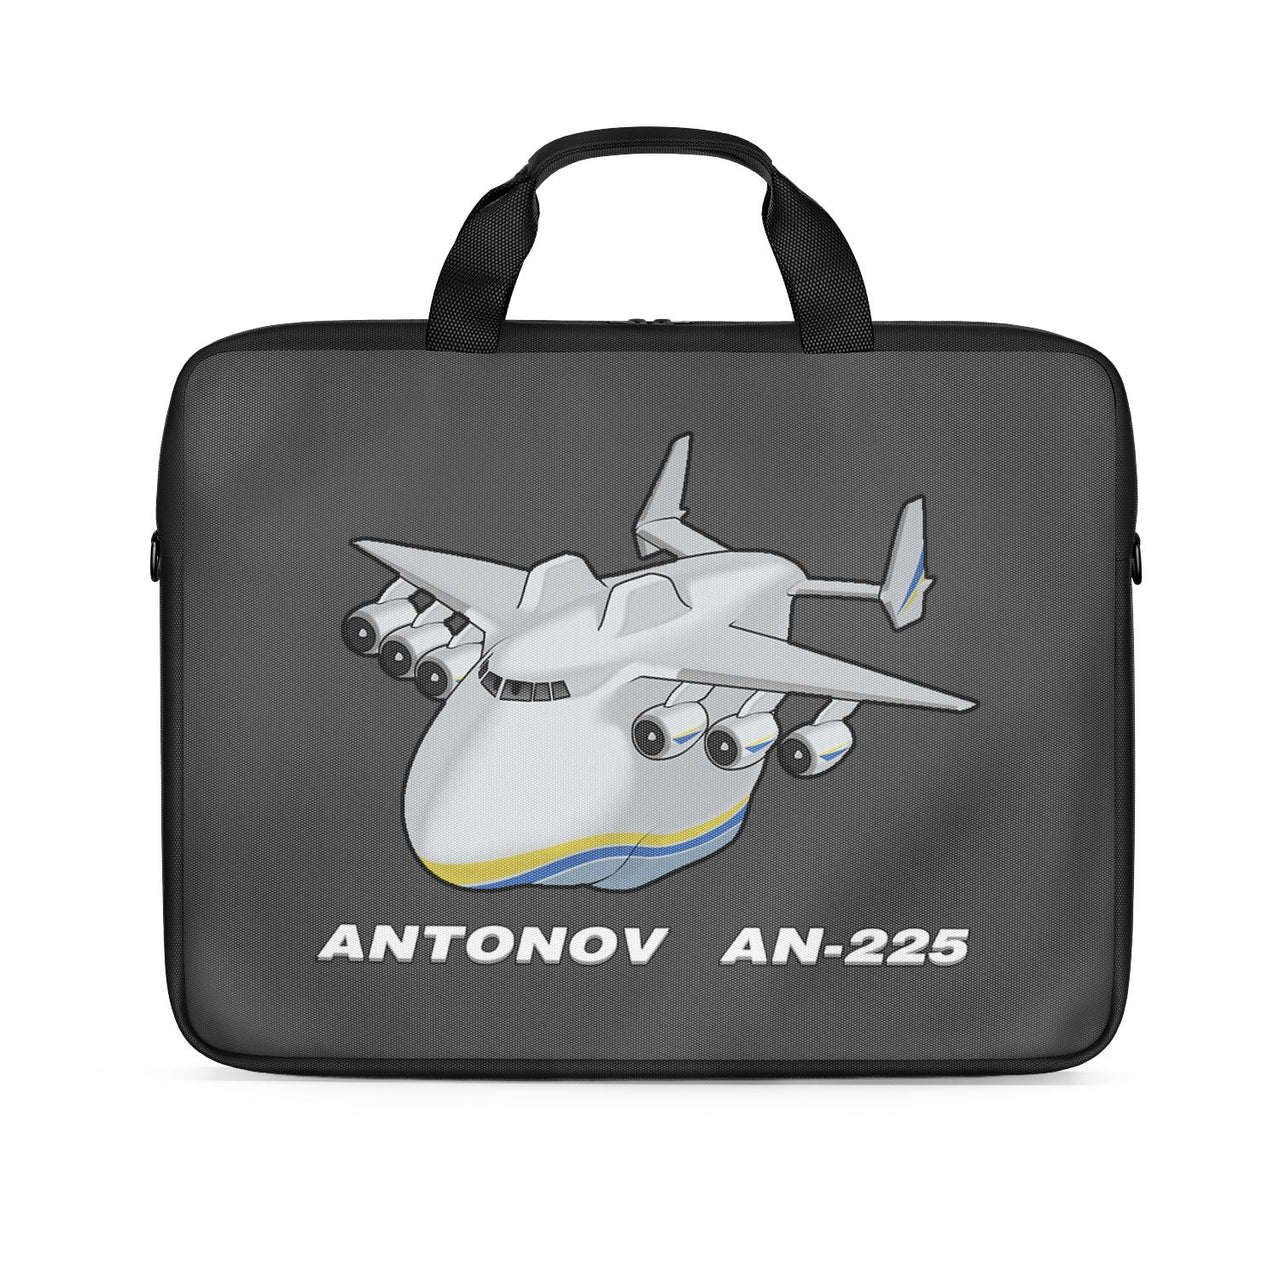 Antonov AN-225 (29) Designed Laptop & Tablet Bags